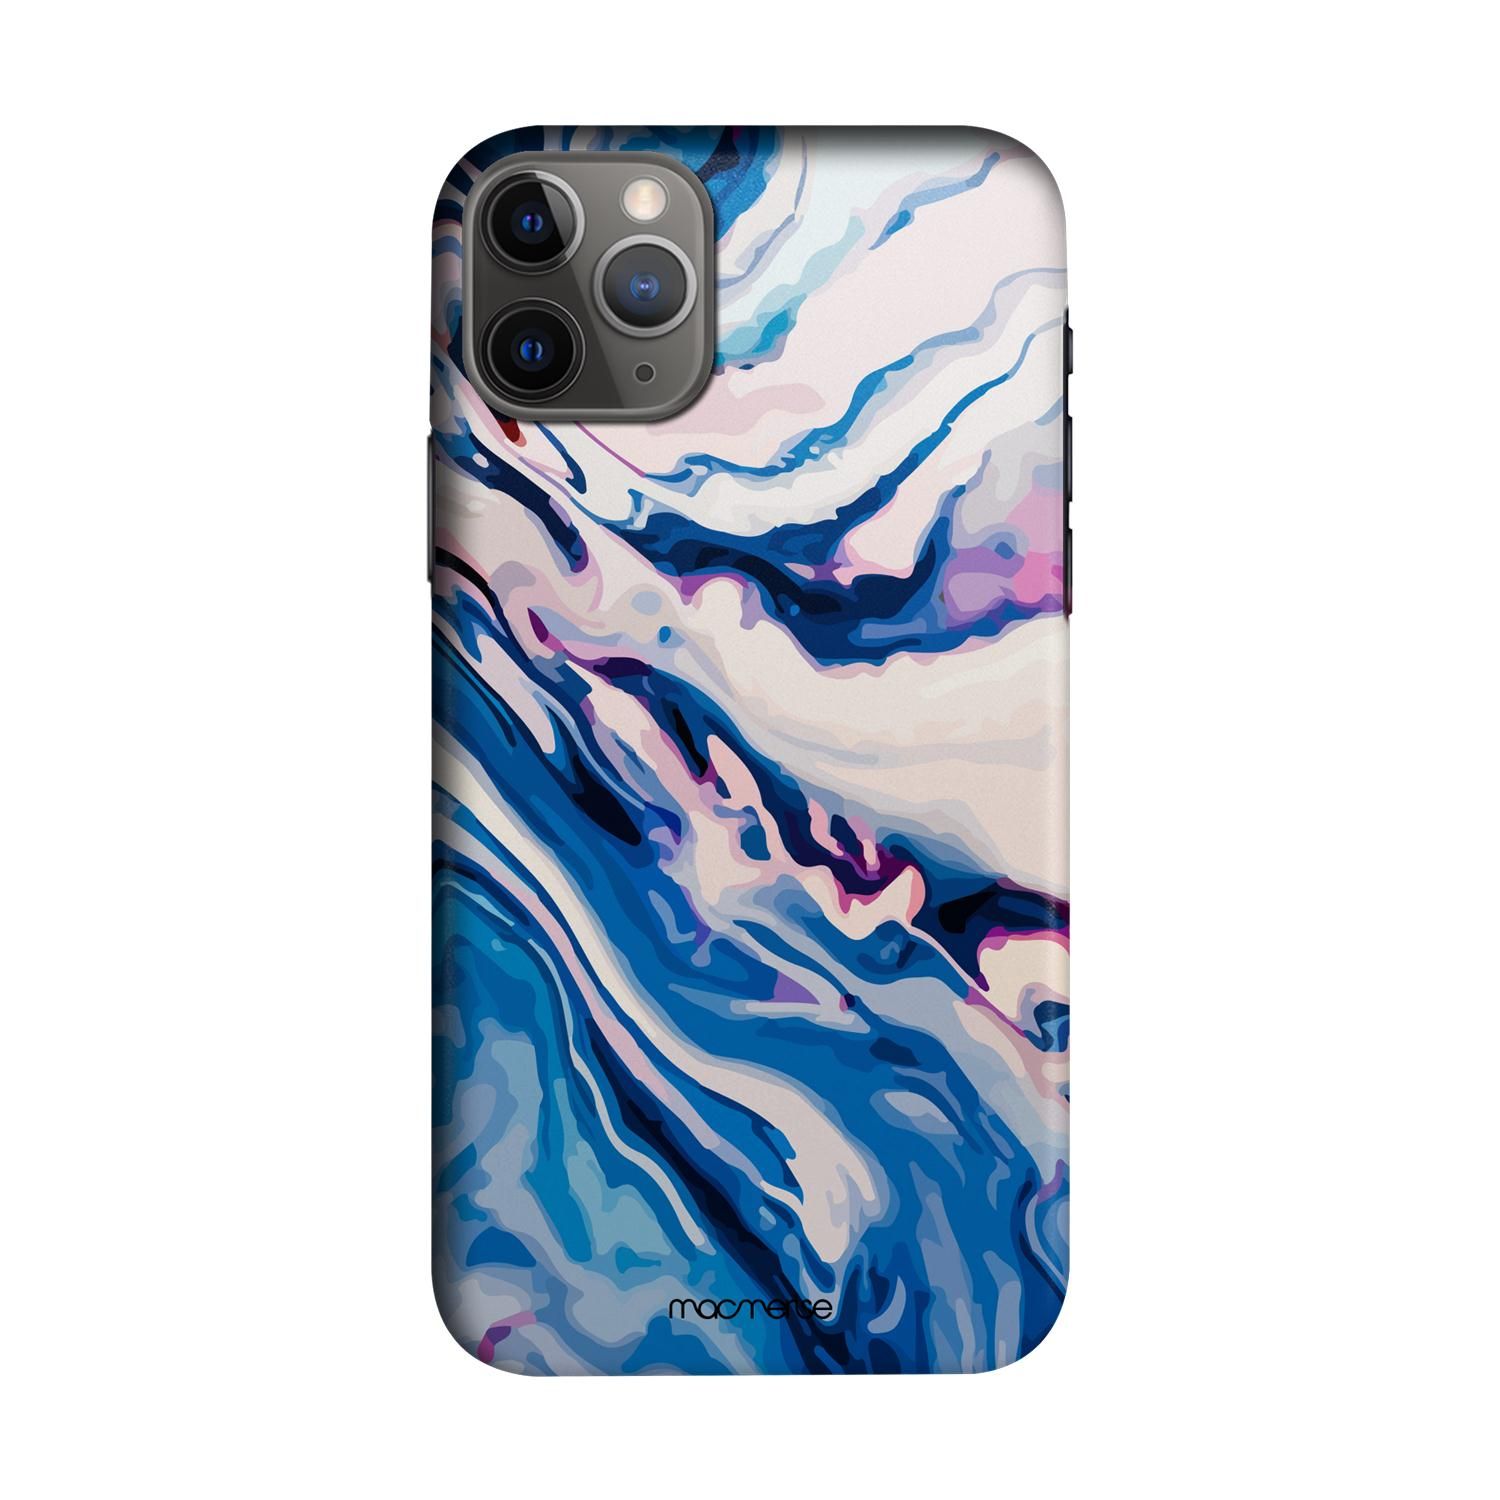 Buy Liquid Funk Pinkblue - Sleek Phone Case for iPhone 11 Pro Max Online